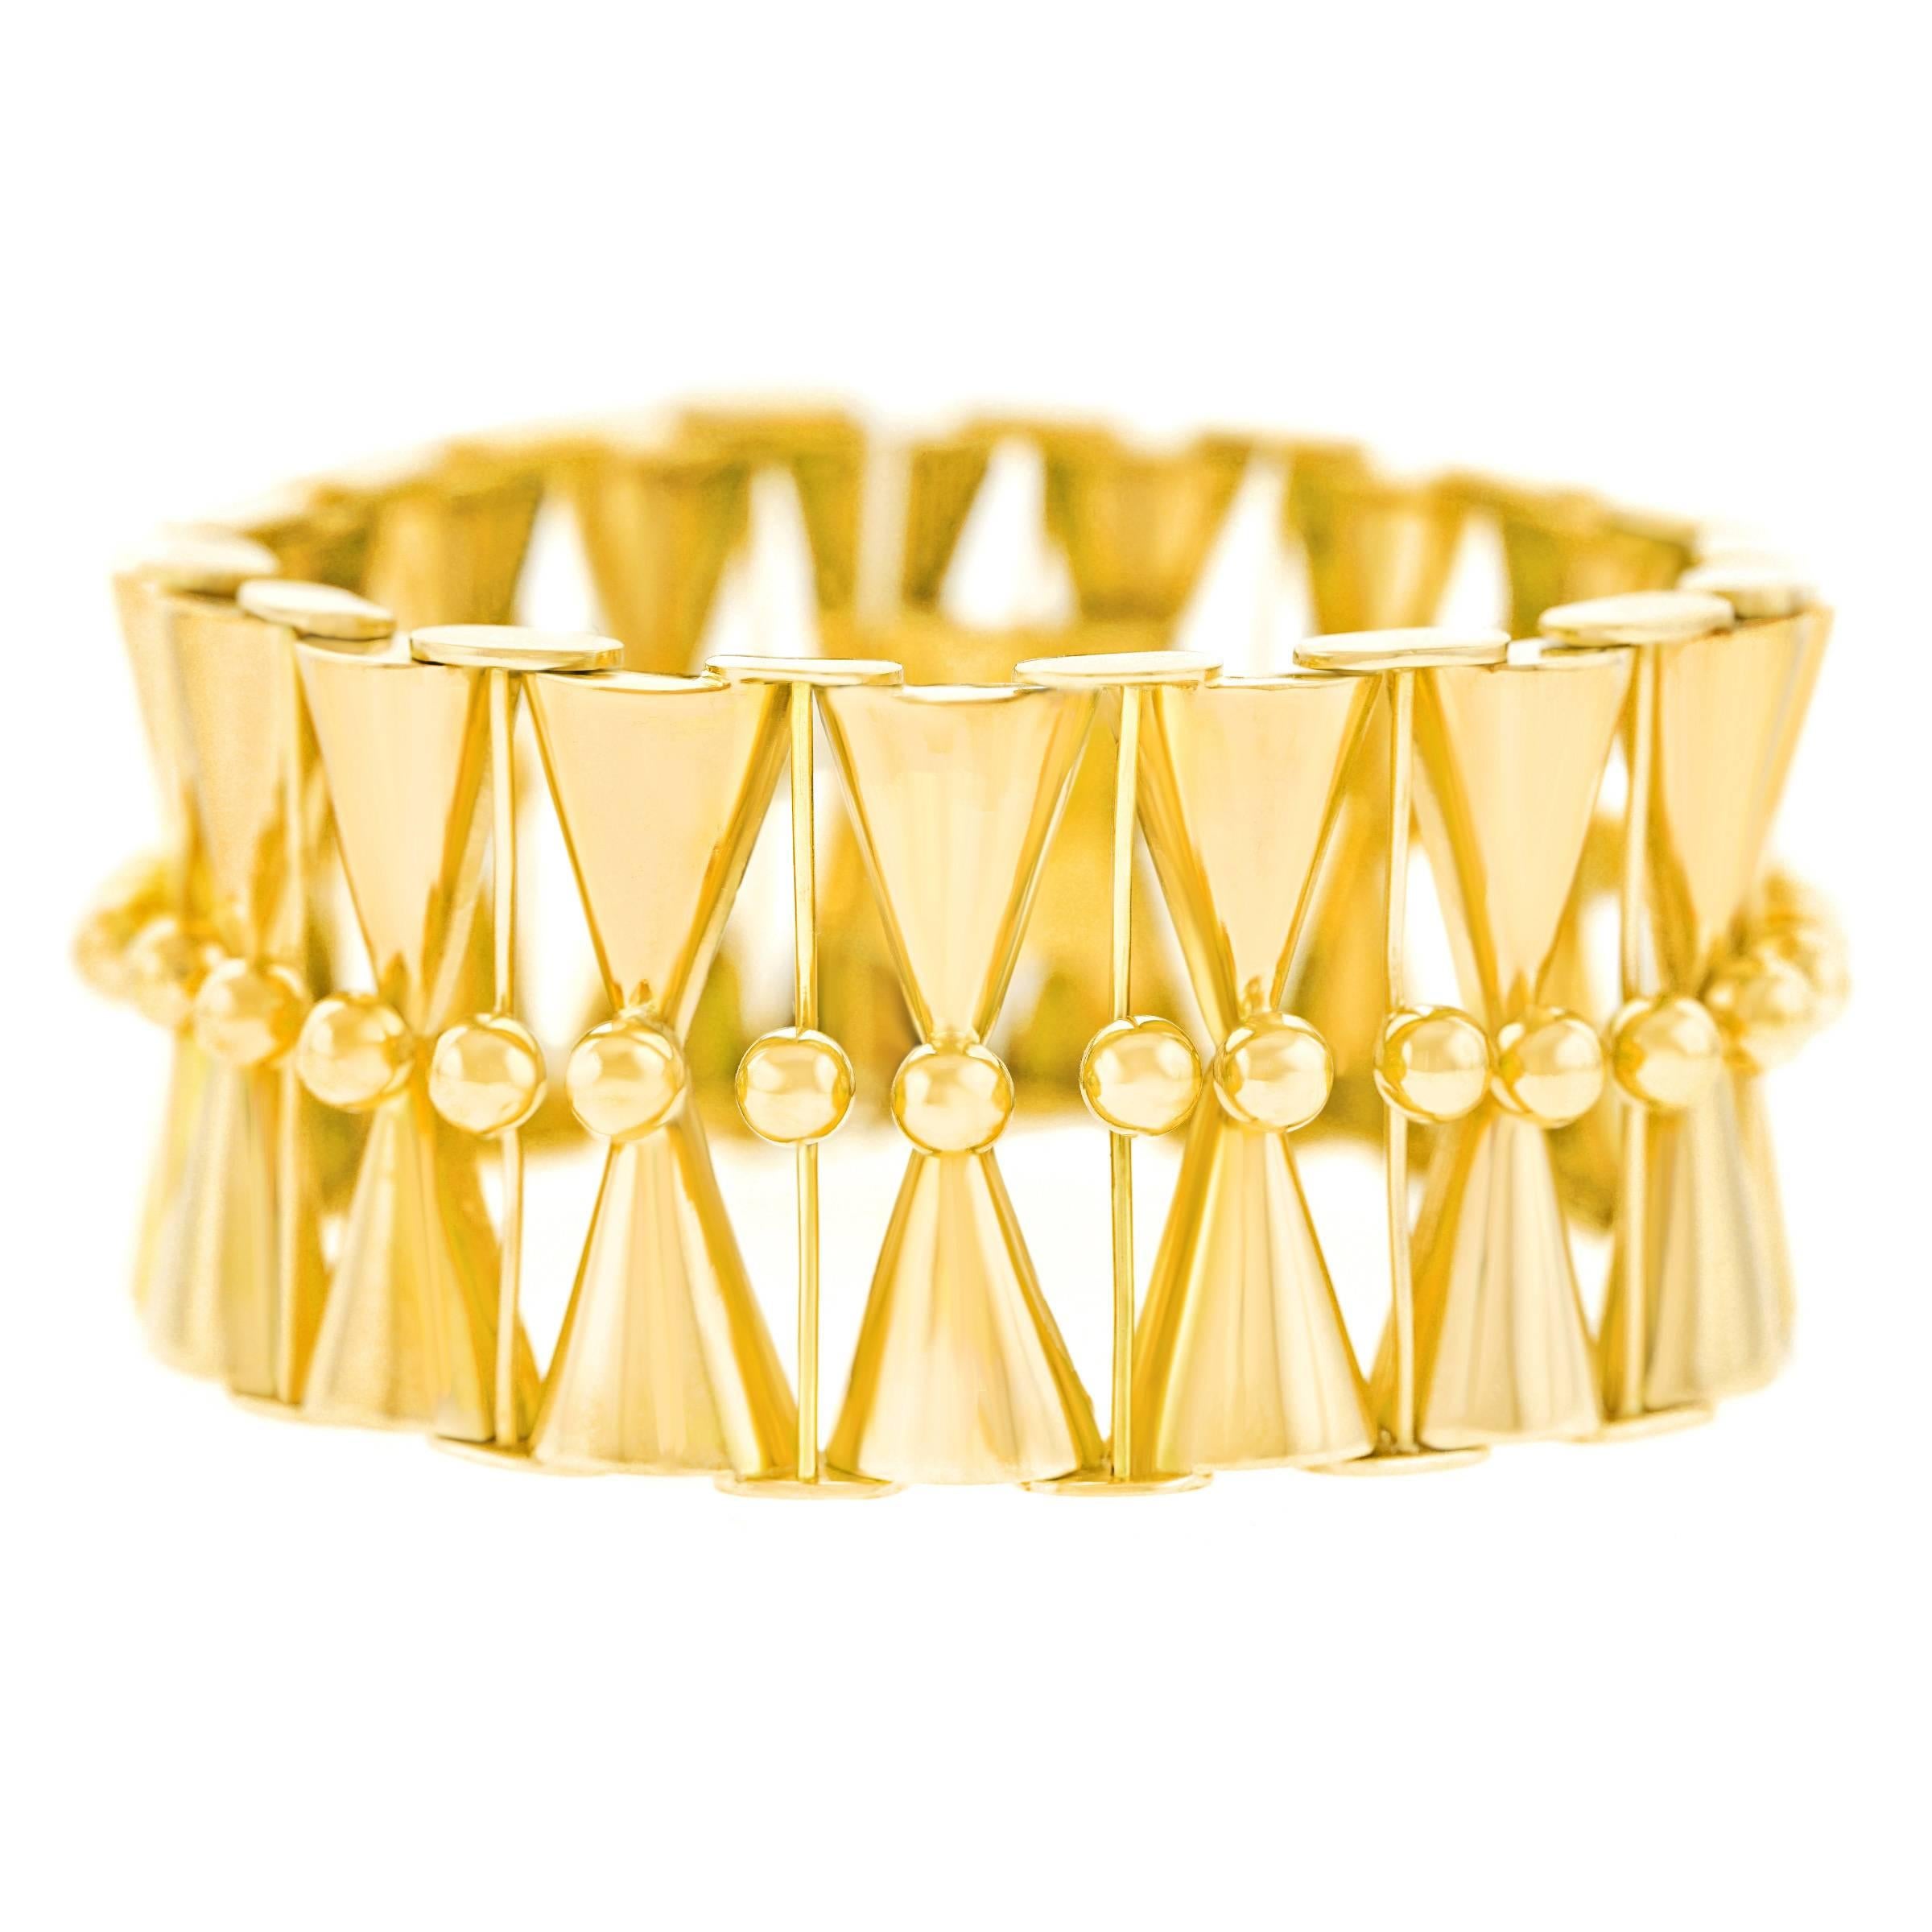 Art Deco Gold Bracelet